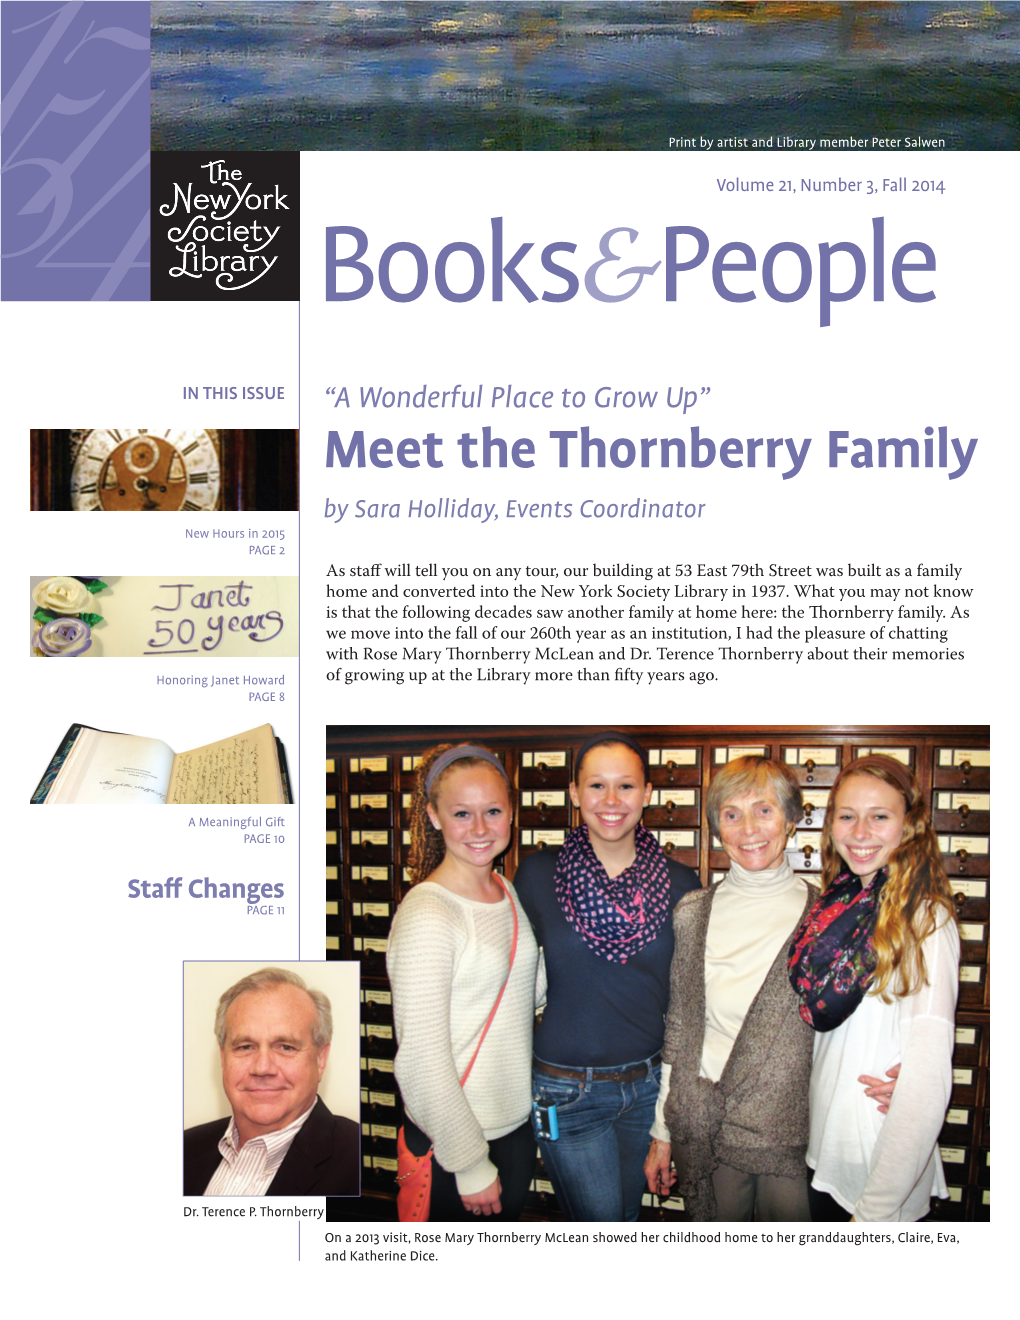 Meet the Thornberry Family